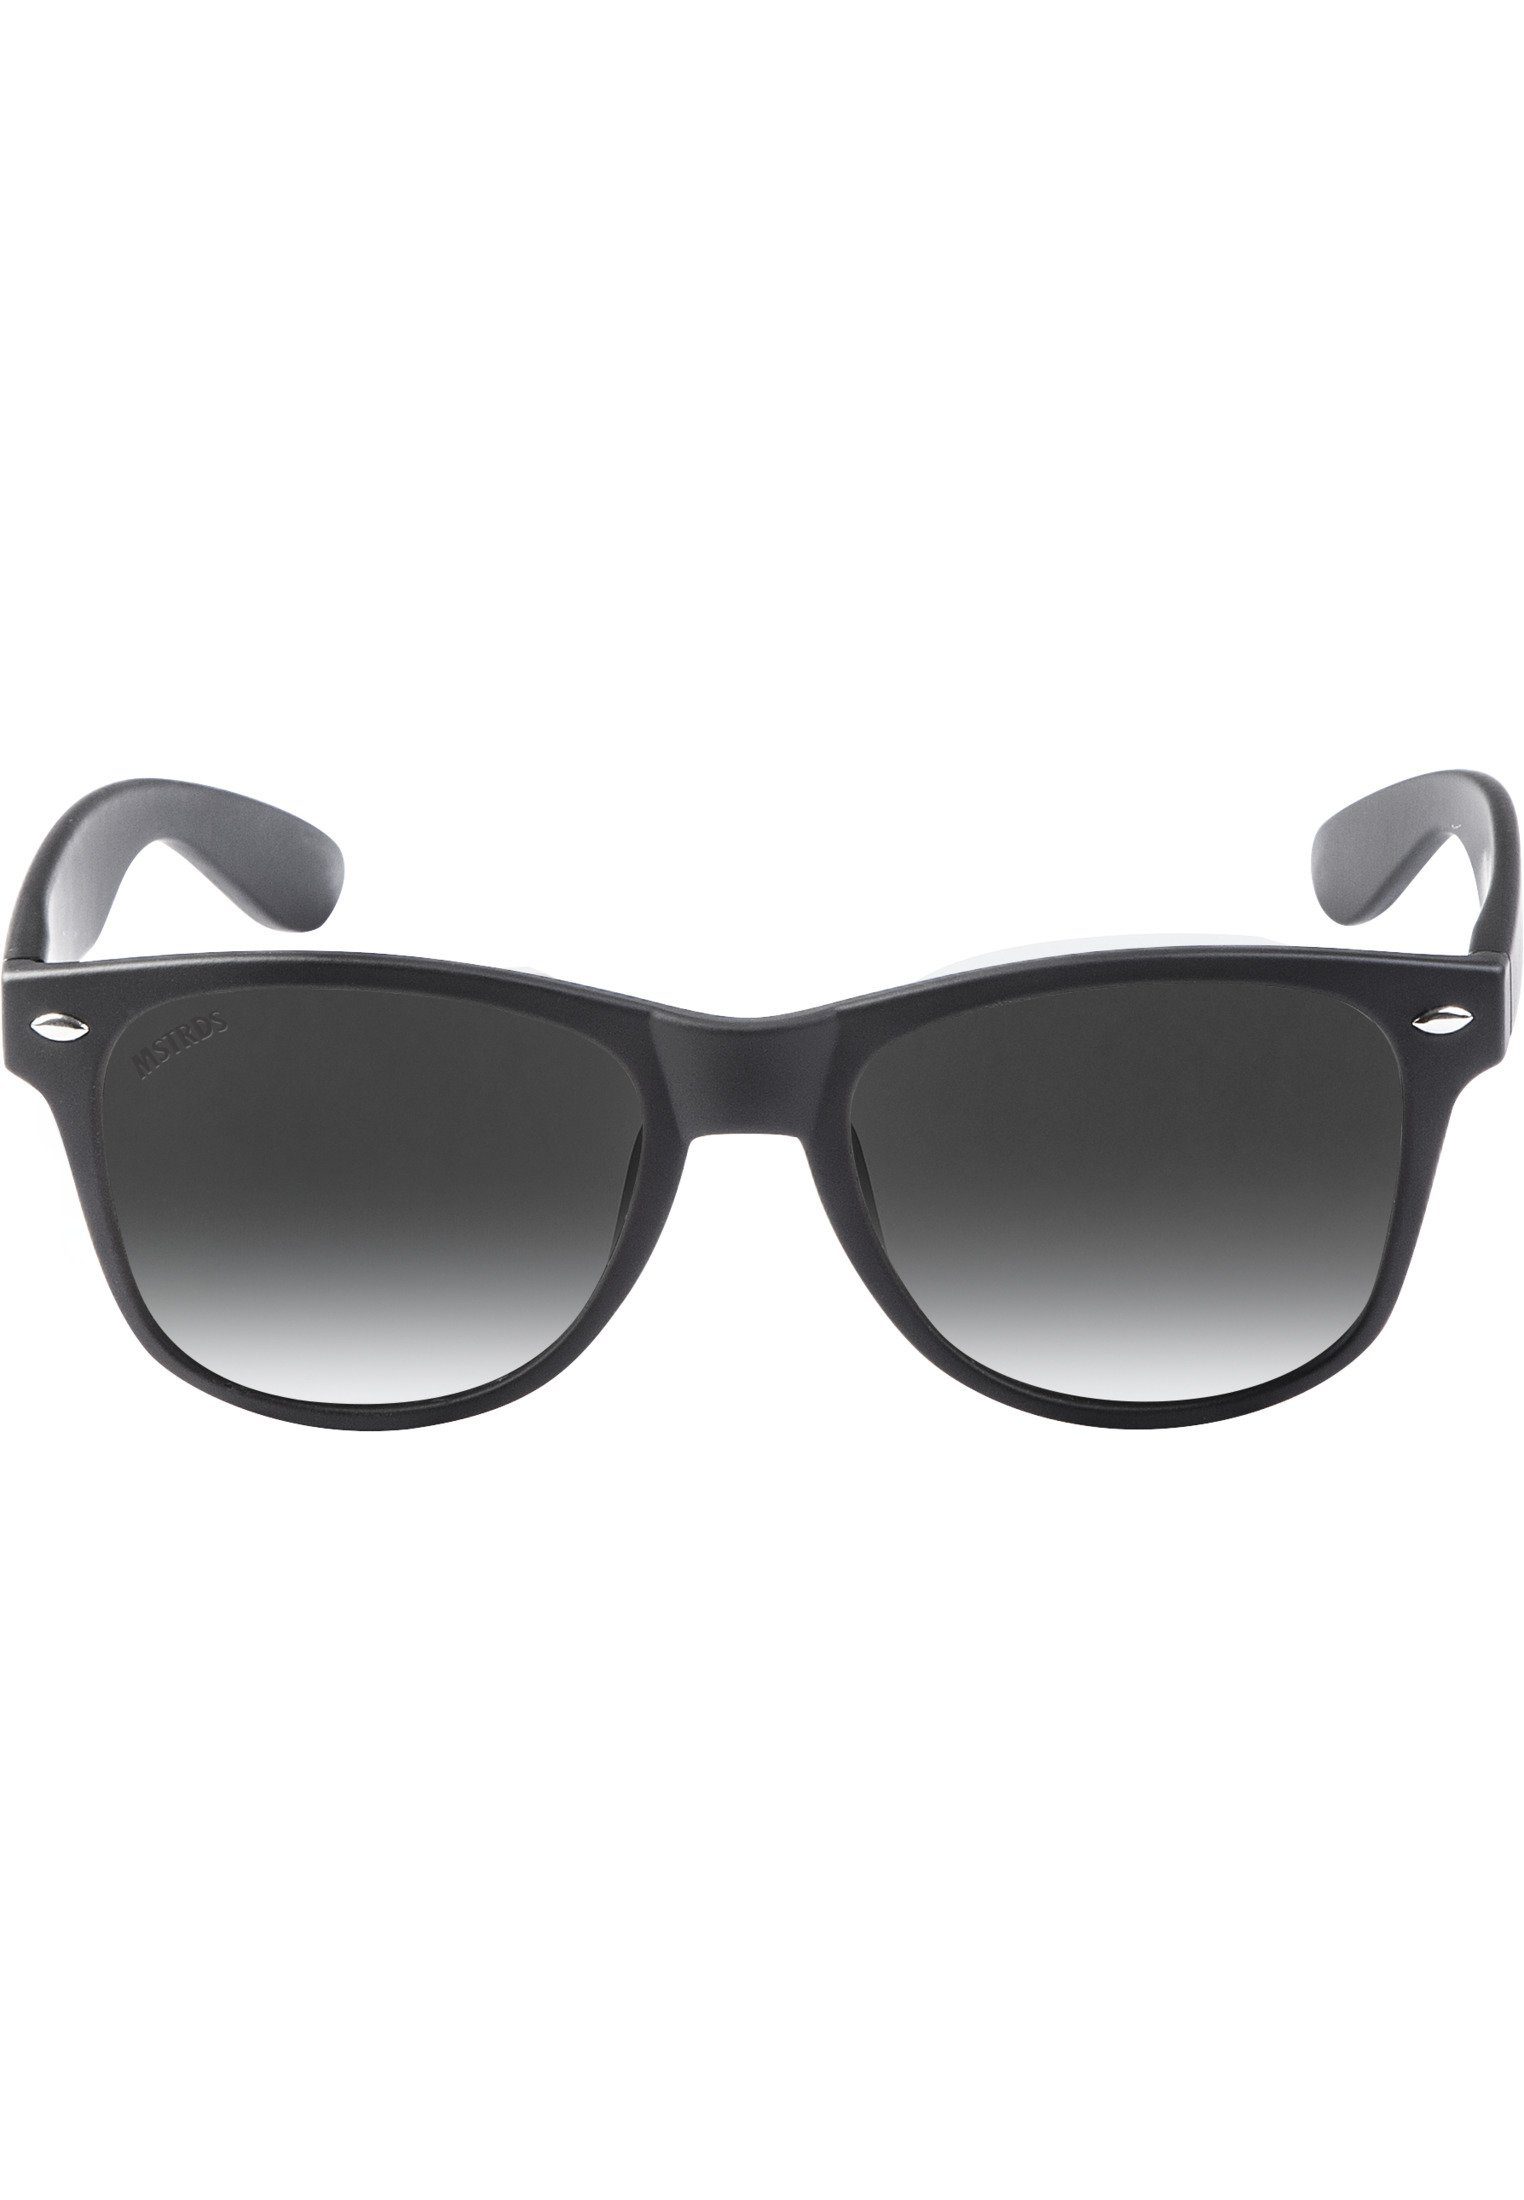 MSTRDS Sonnenbrille Accessoires Sunglasses Likoma Sport auch Freien Ideal im für geeignet Youth